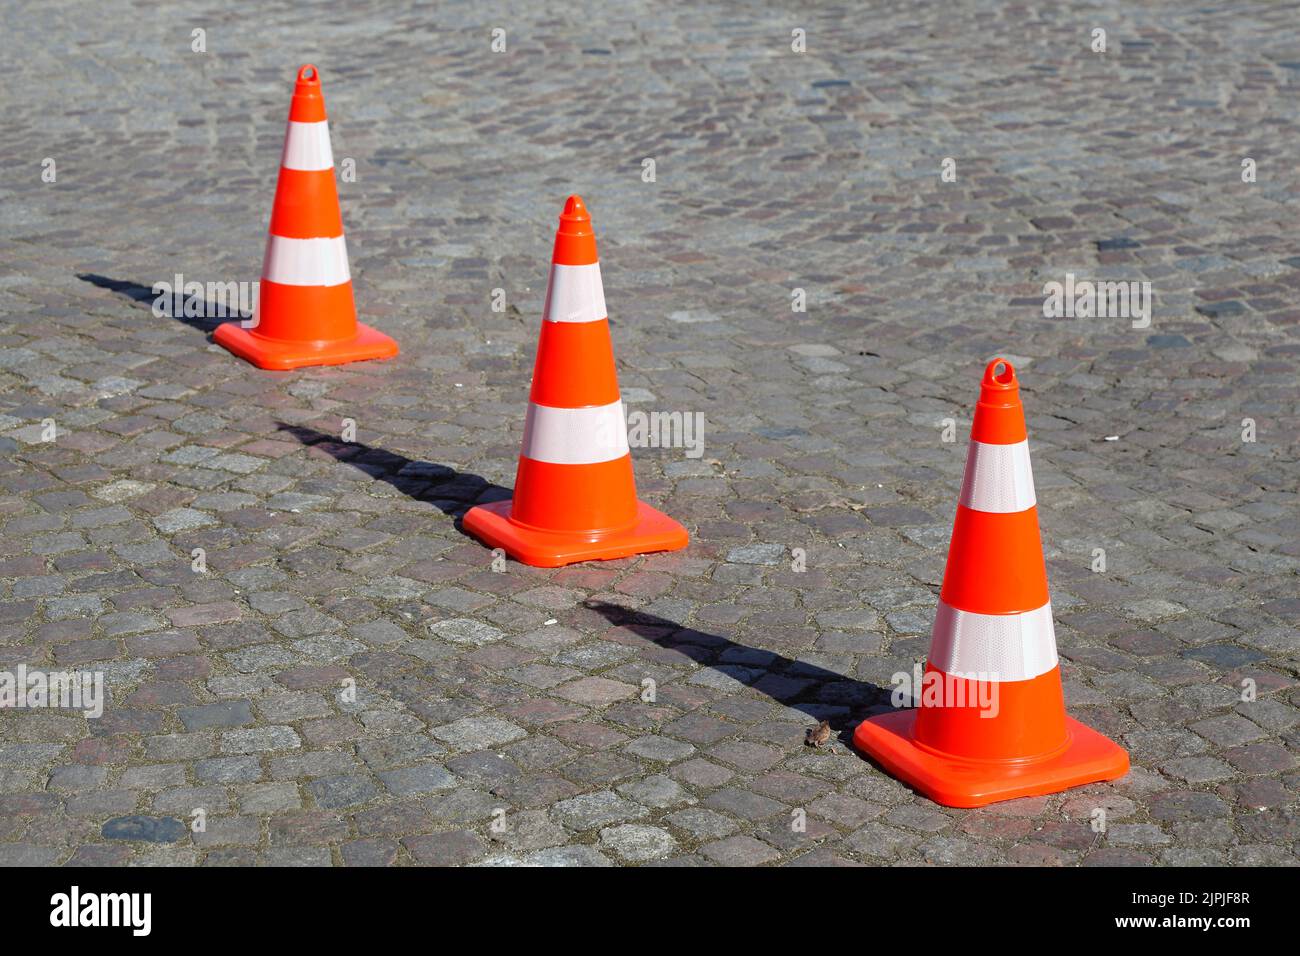 pylon, traffic cone, pylons, cone, traffic cones Stock Photo